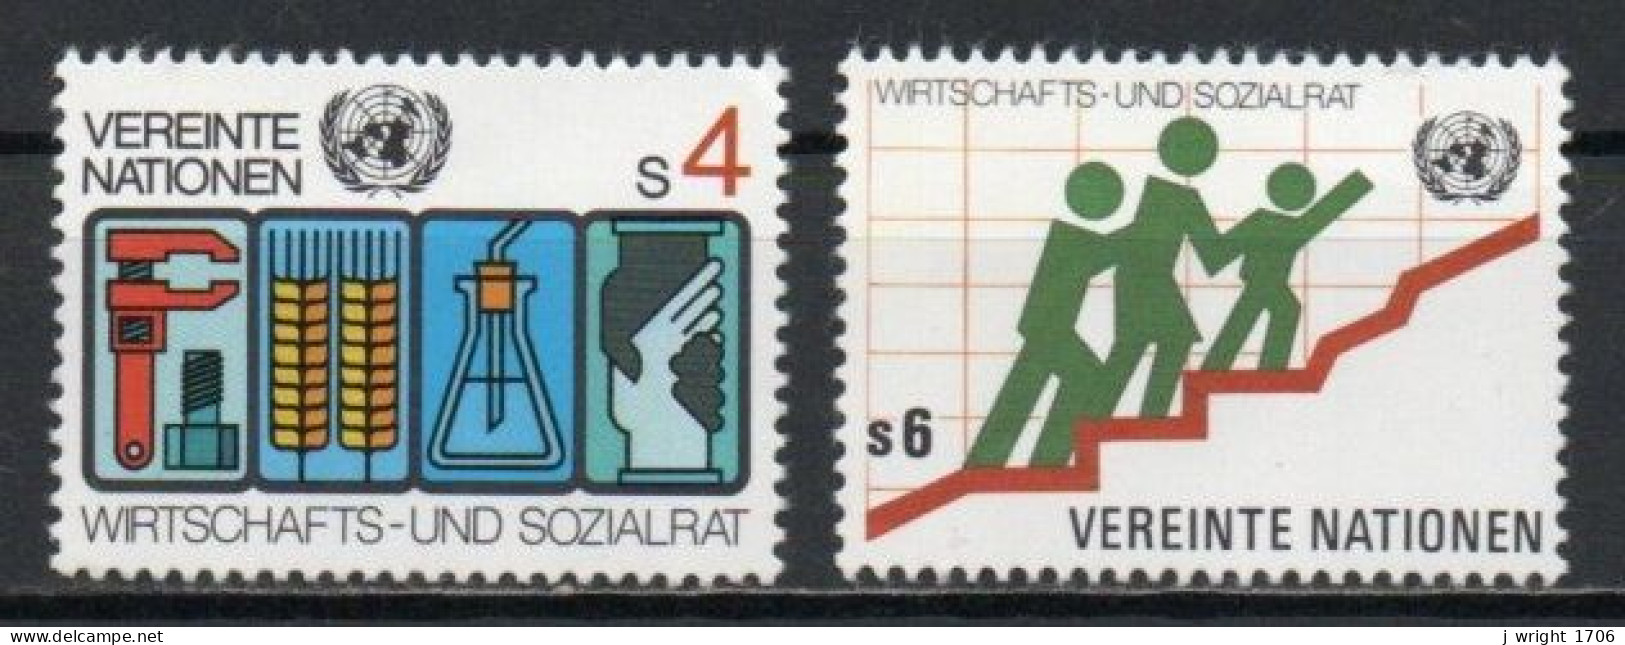 UN/Vienna, 1980, Economic & Social Council, Set, MNH - Nuevos